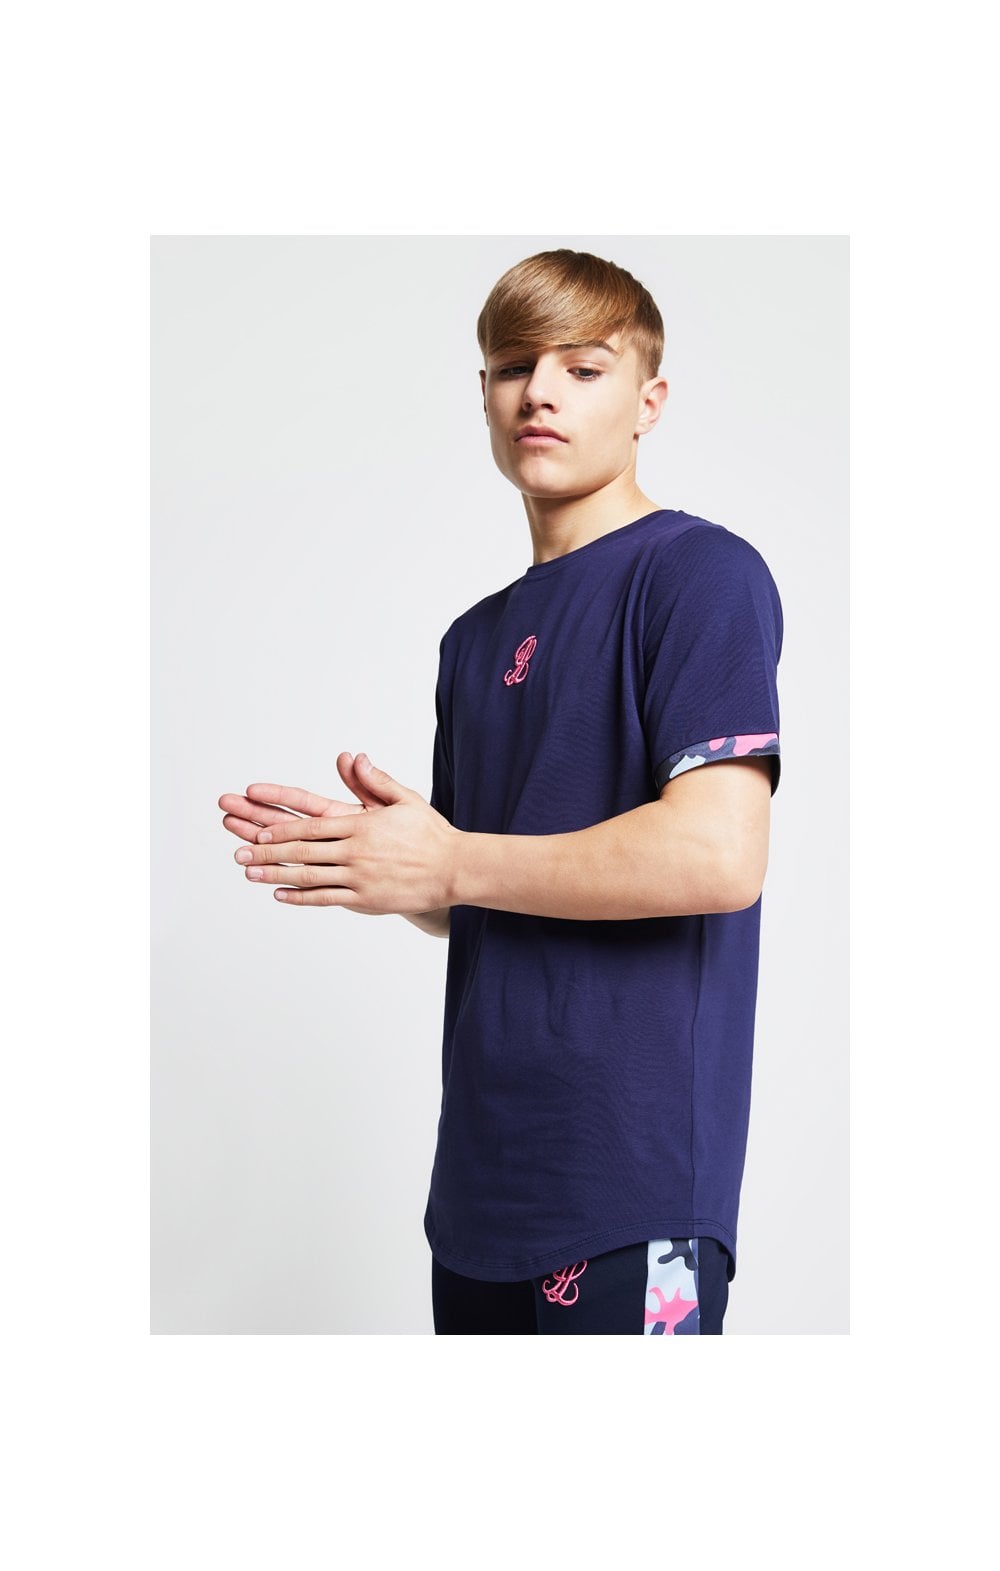 Illusive London T-Shirt Kontrast Saum - Marineblau und Neon Rosa Camouflage (2)